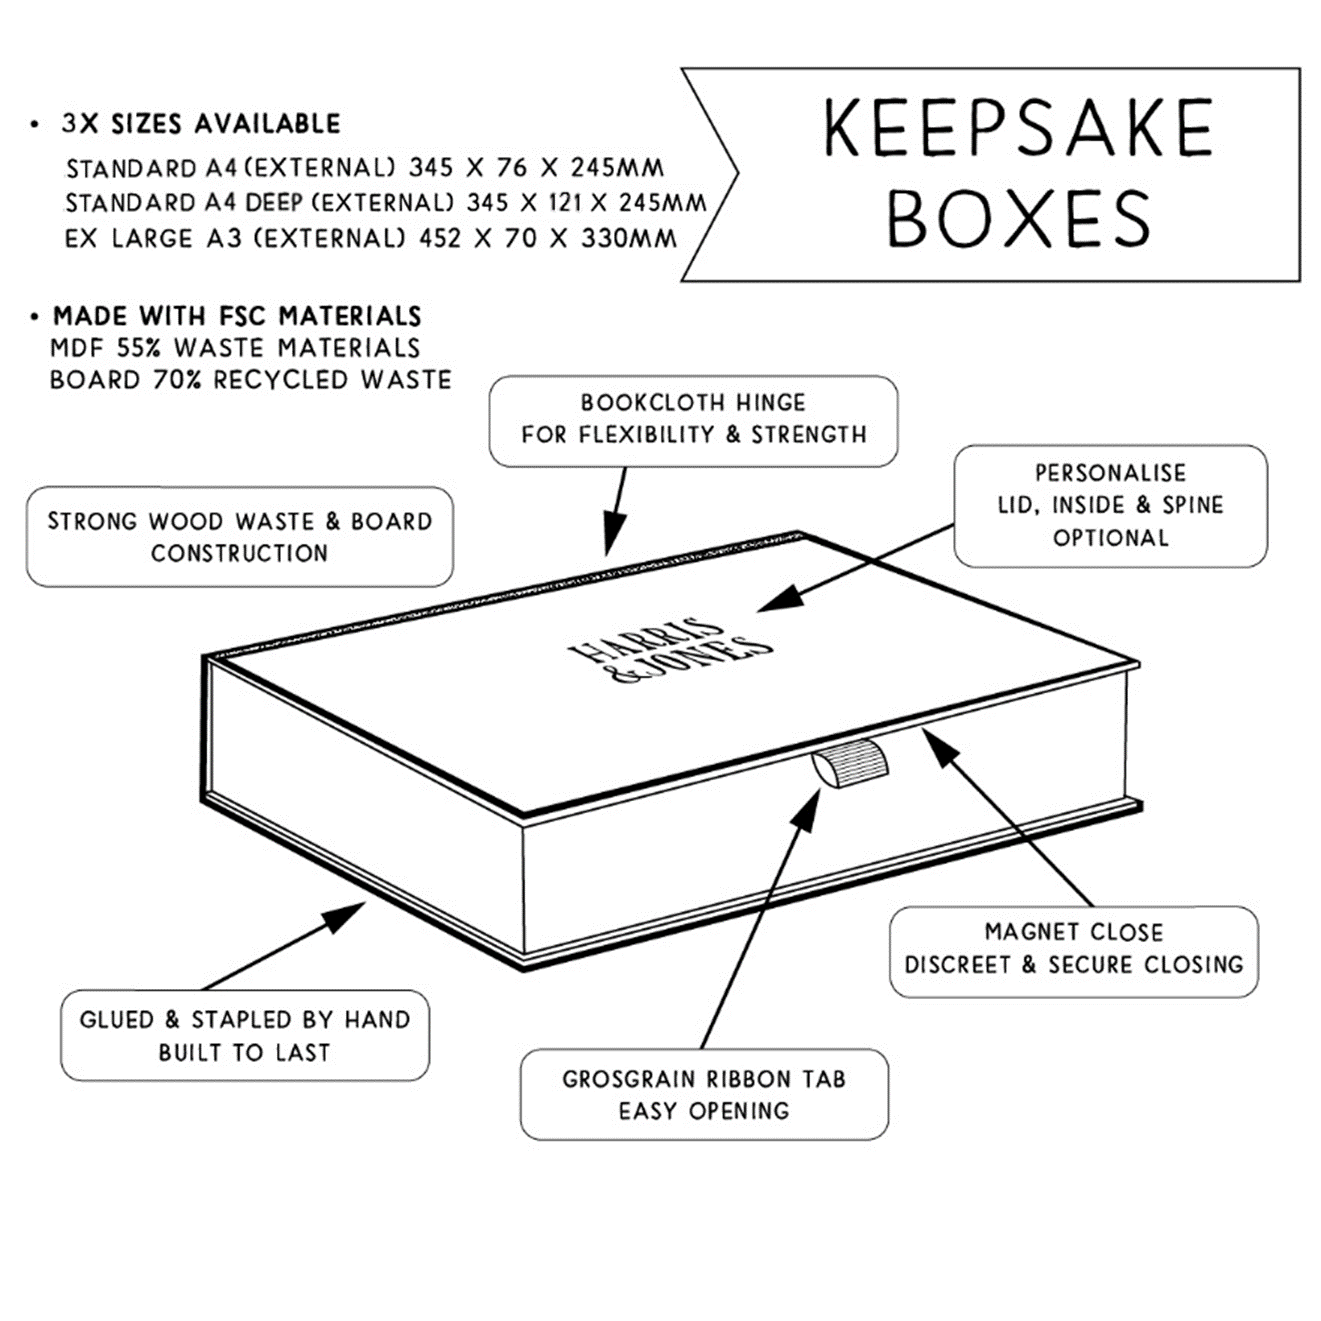 Patterned Keepsake Boxes